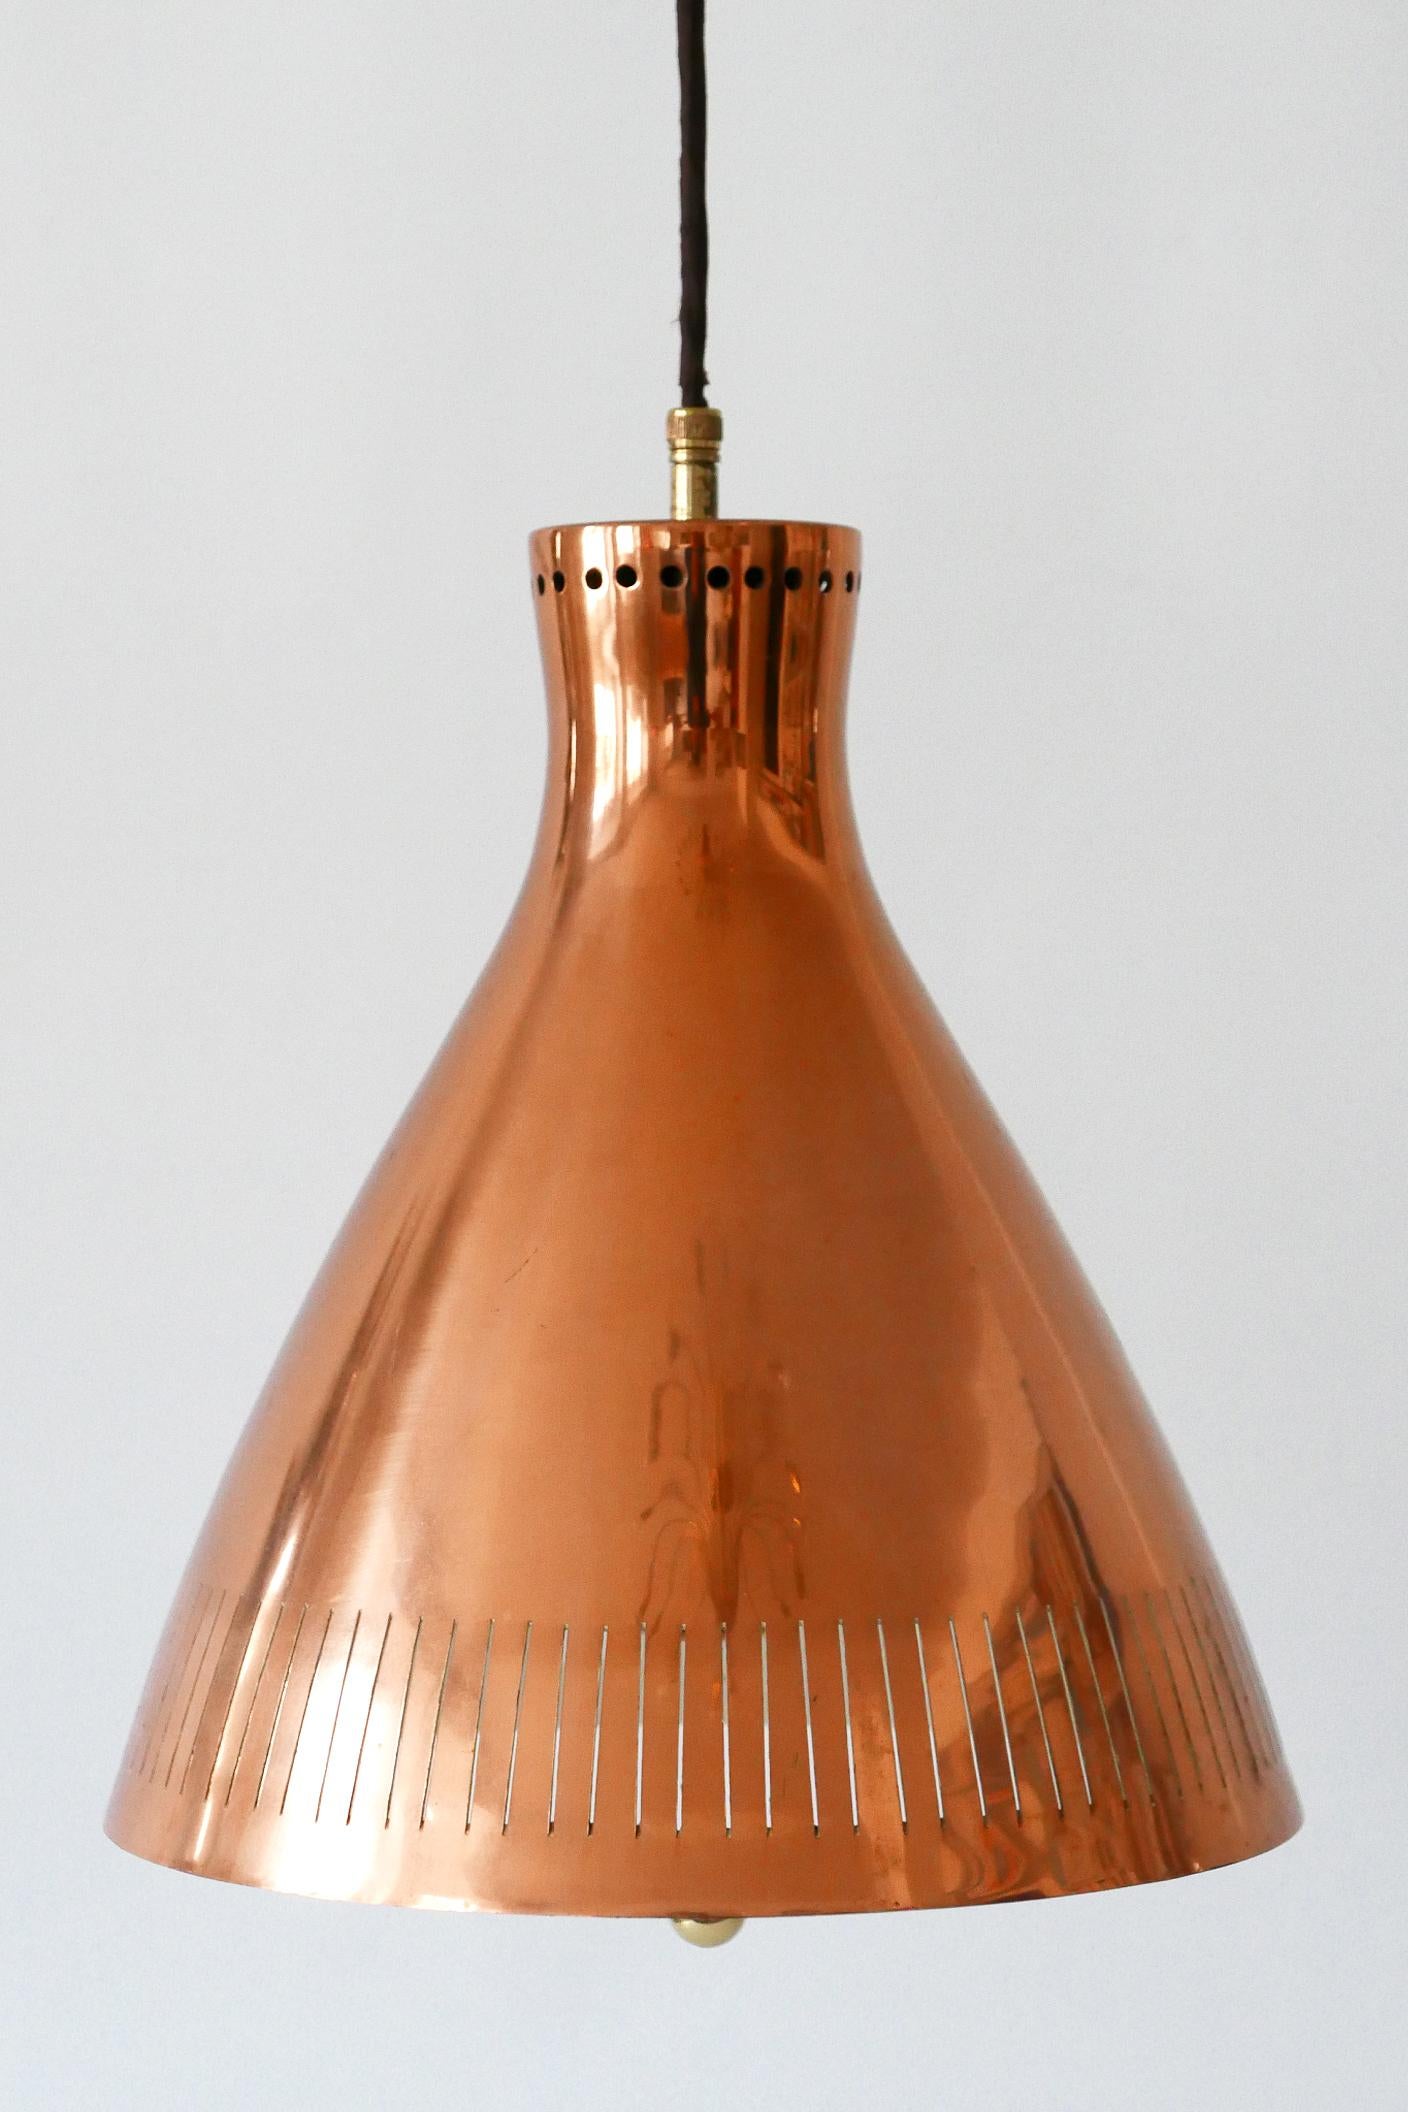 Mid-Century Modern Copper Pendant Lamp by Vereinigte Werkstätten 1960s Germany For Sale 1